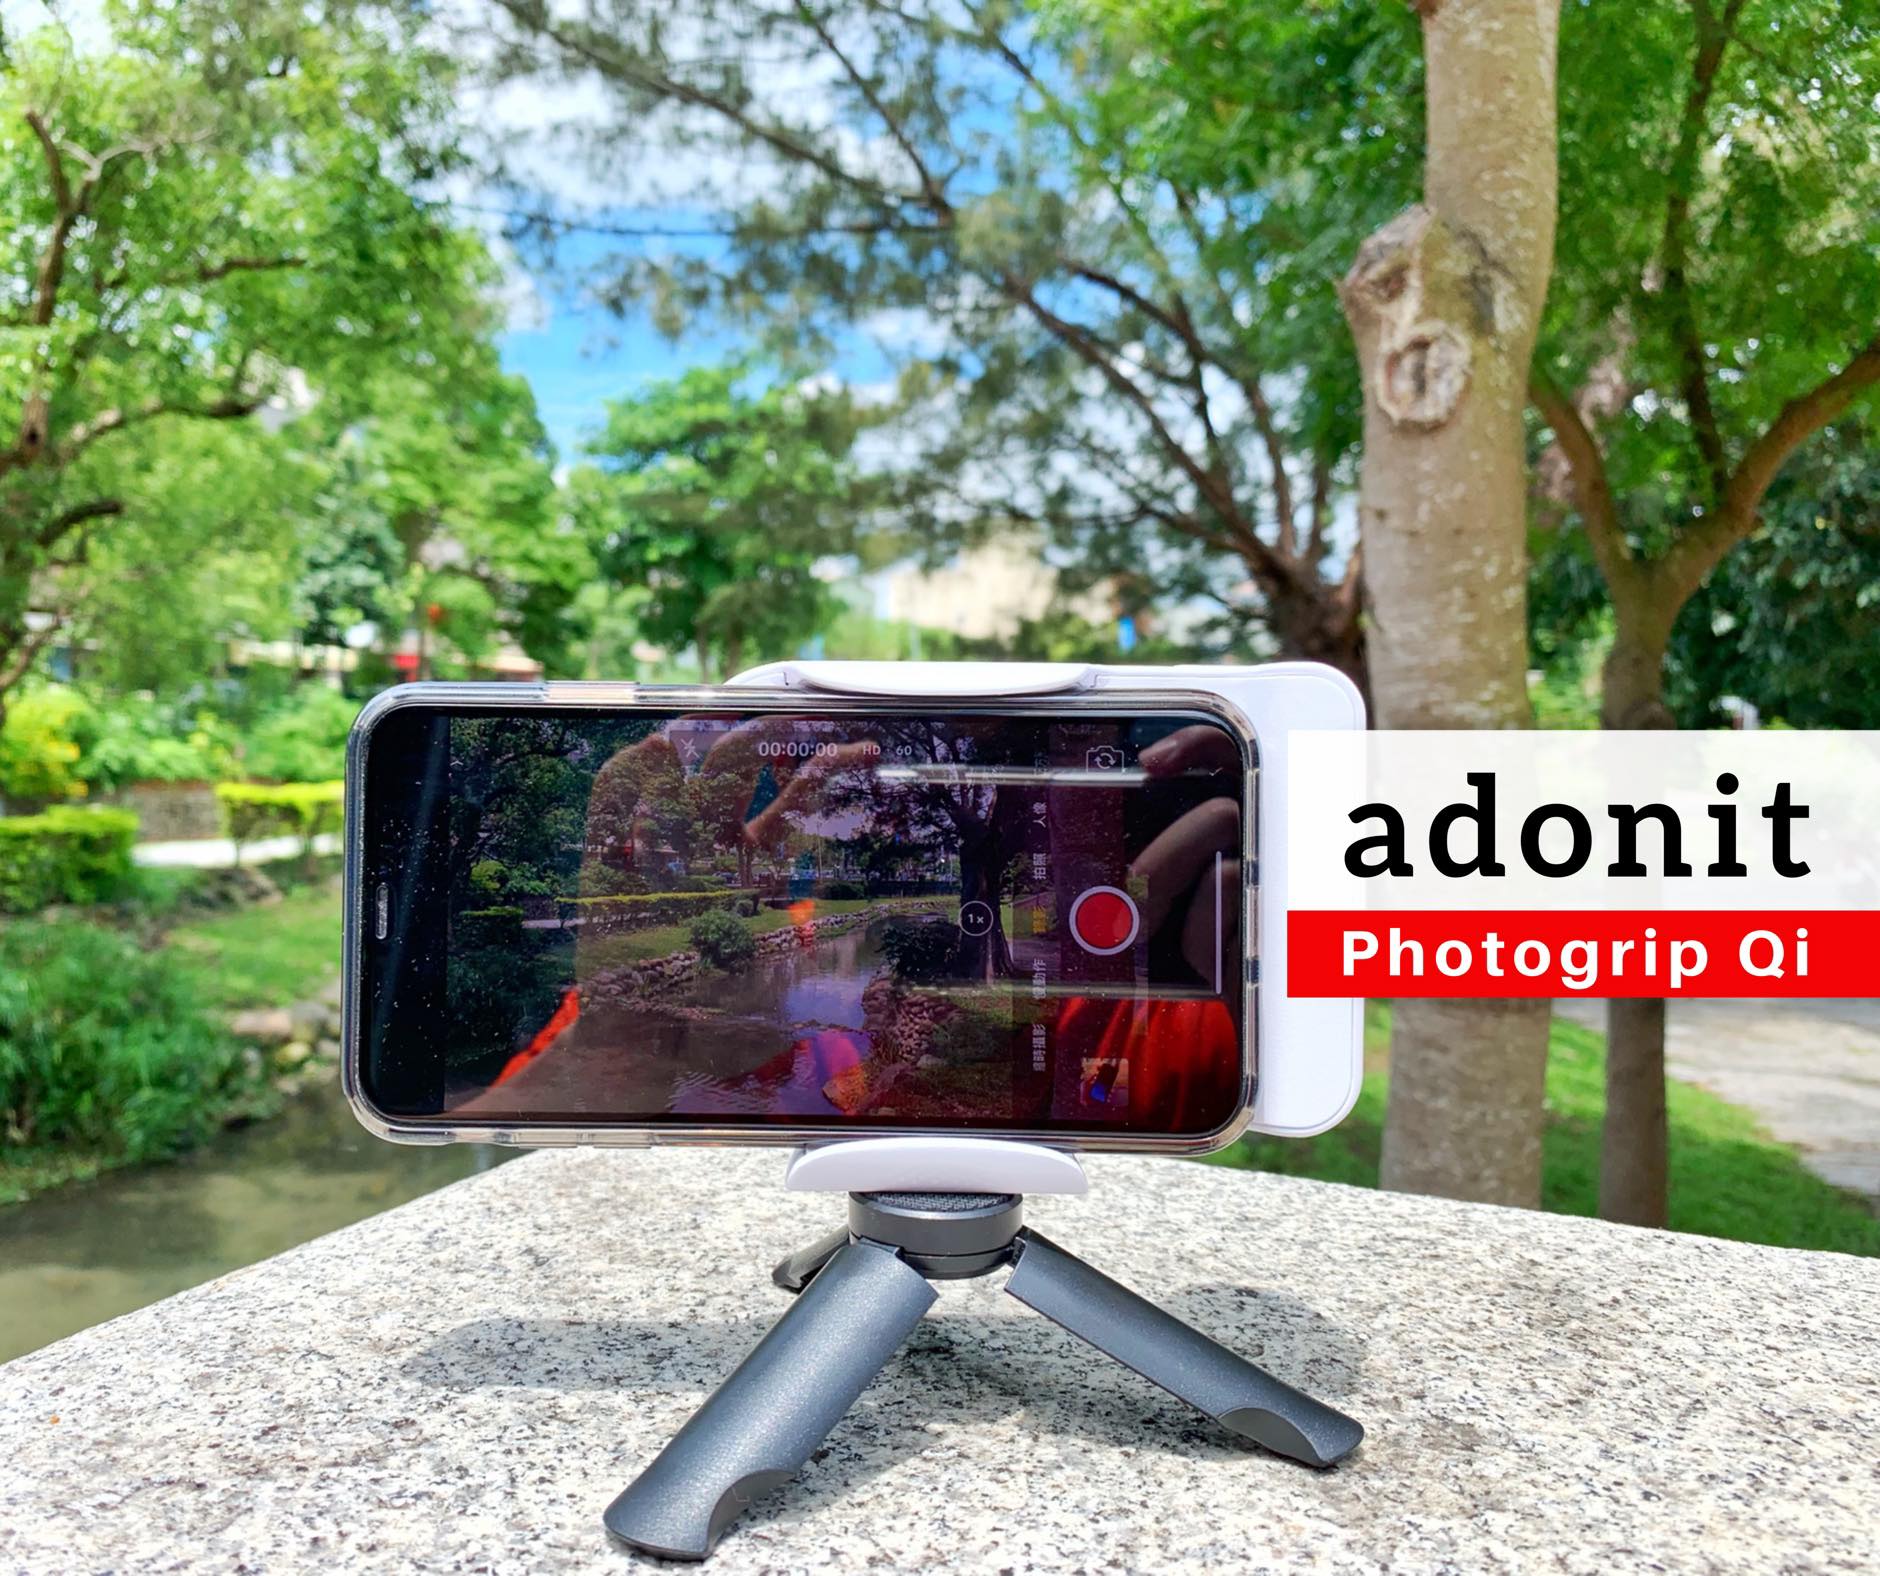 Adonit photogrip Qi - 內建無線充電的拍照握把、手機攝影專業工具 - 拍攝器材 - 科技生活 - teXch